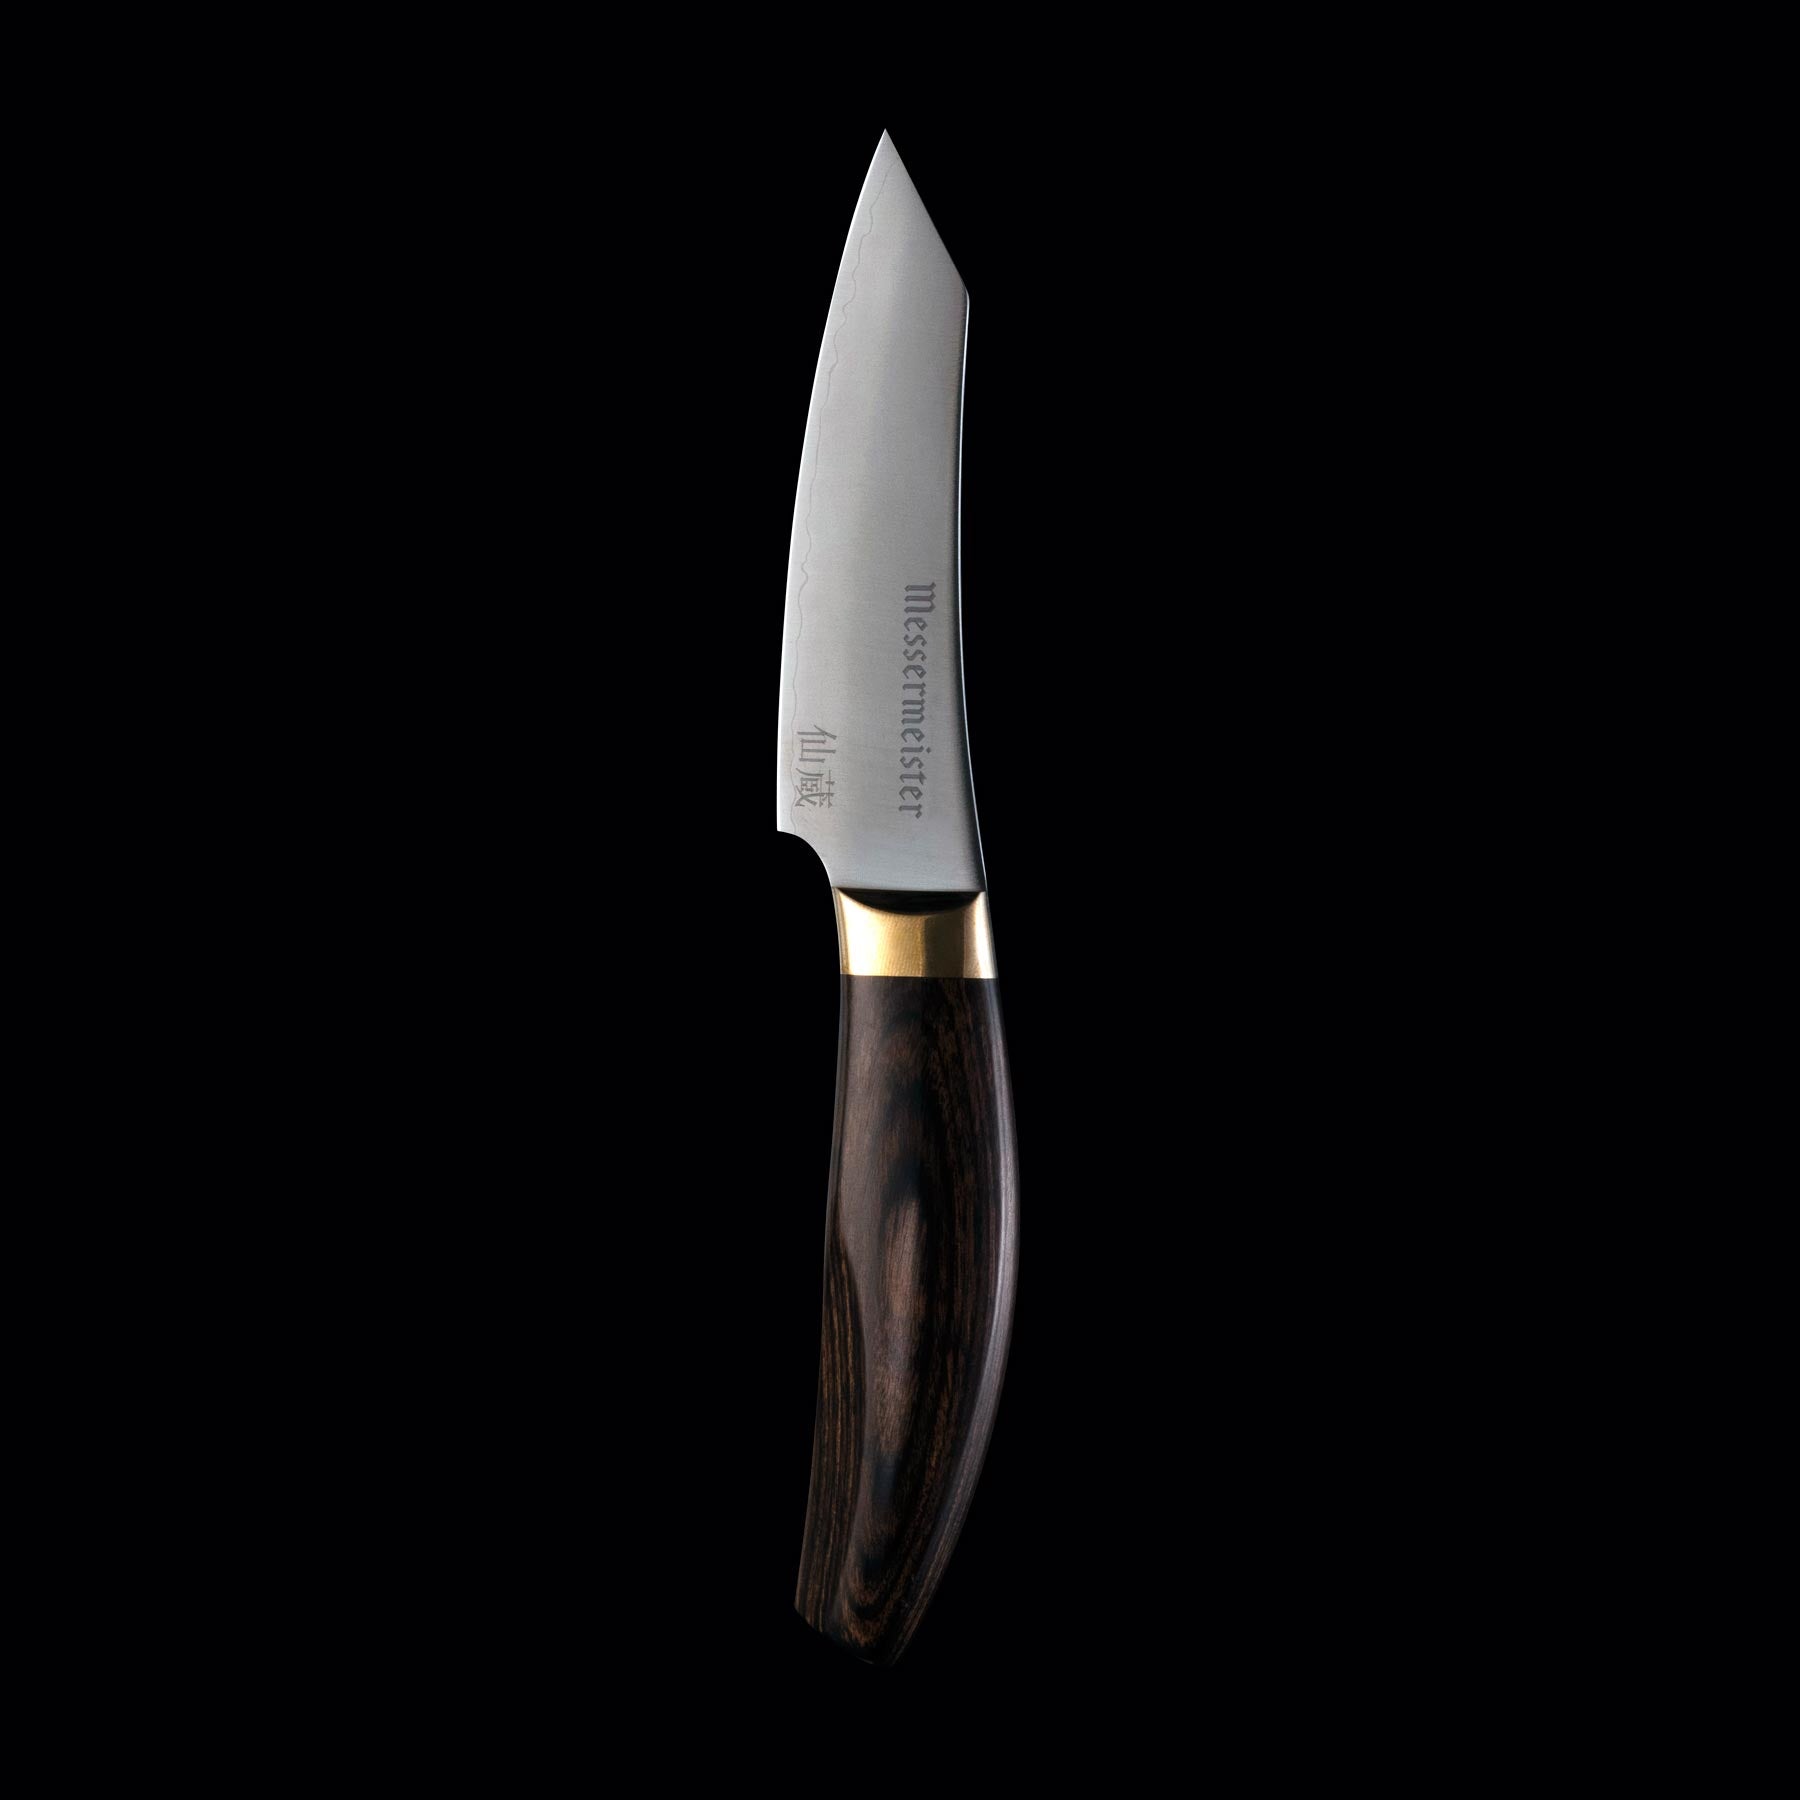 KIWI KITCHEN KNIFE 3.75